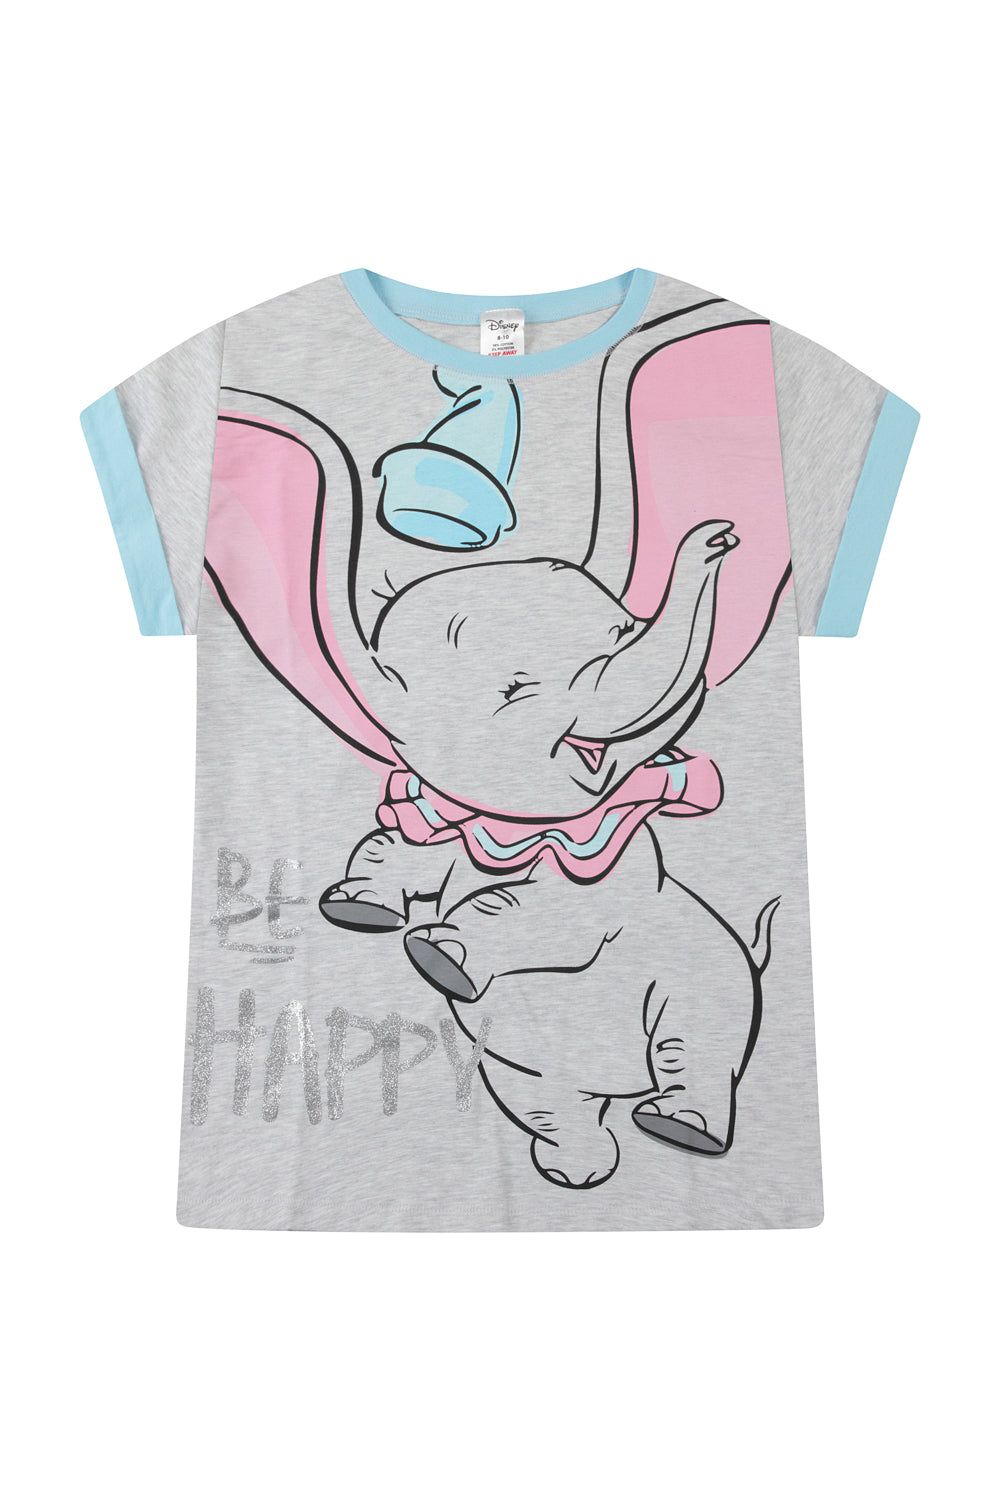 Ladies Disney Dumbo Short Pyjamas - Pyjamas.com